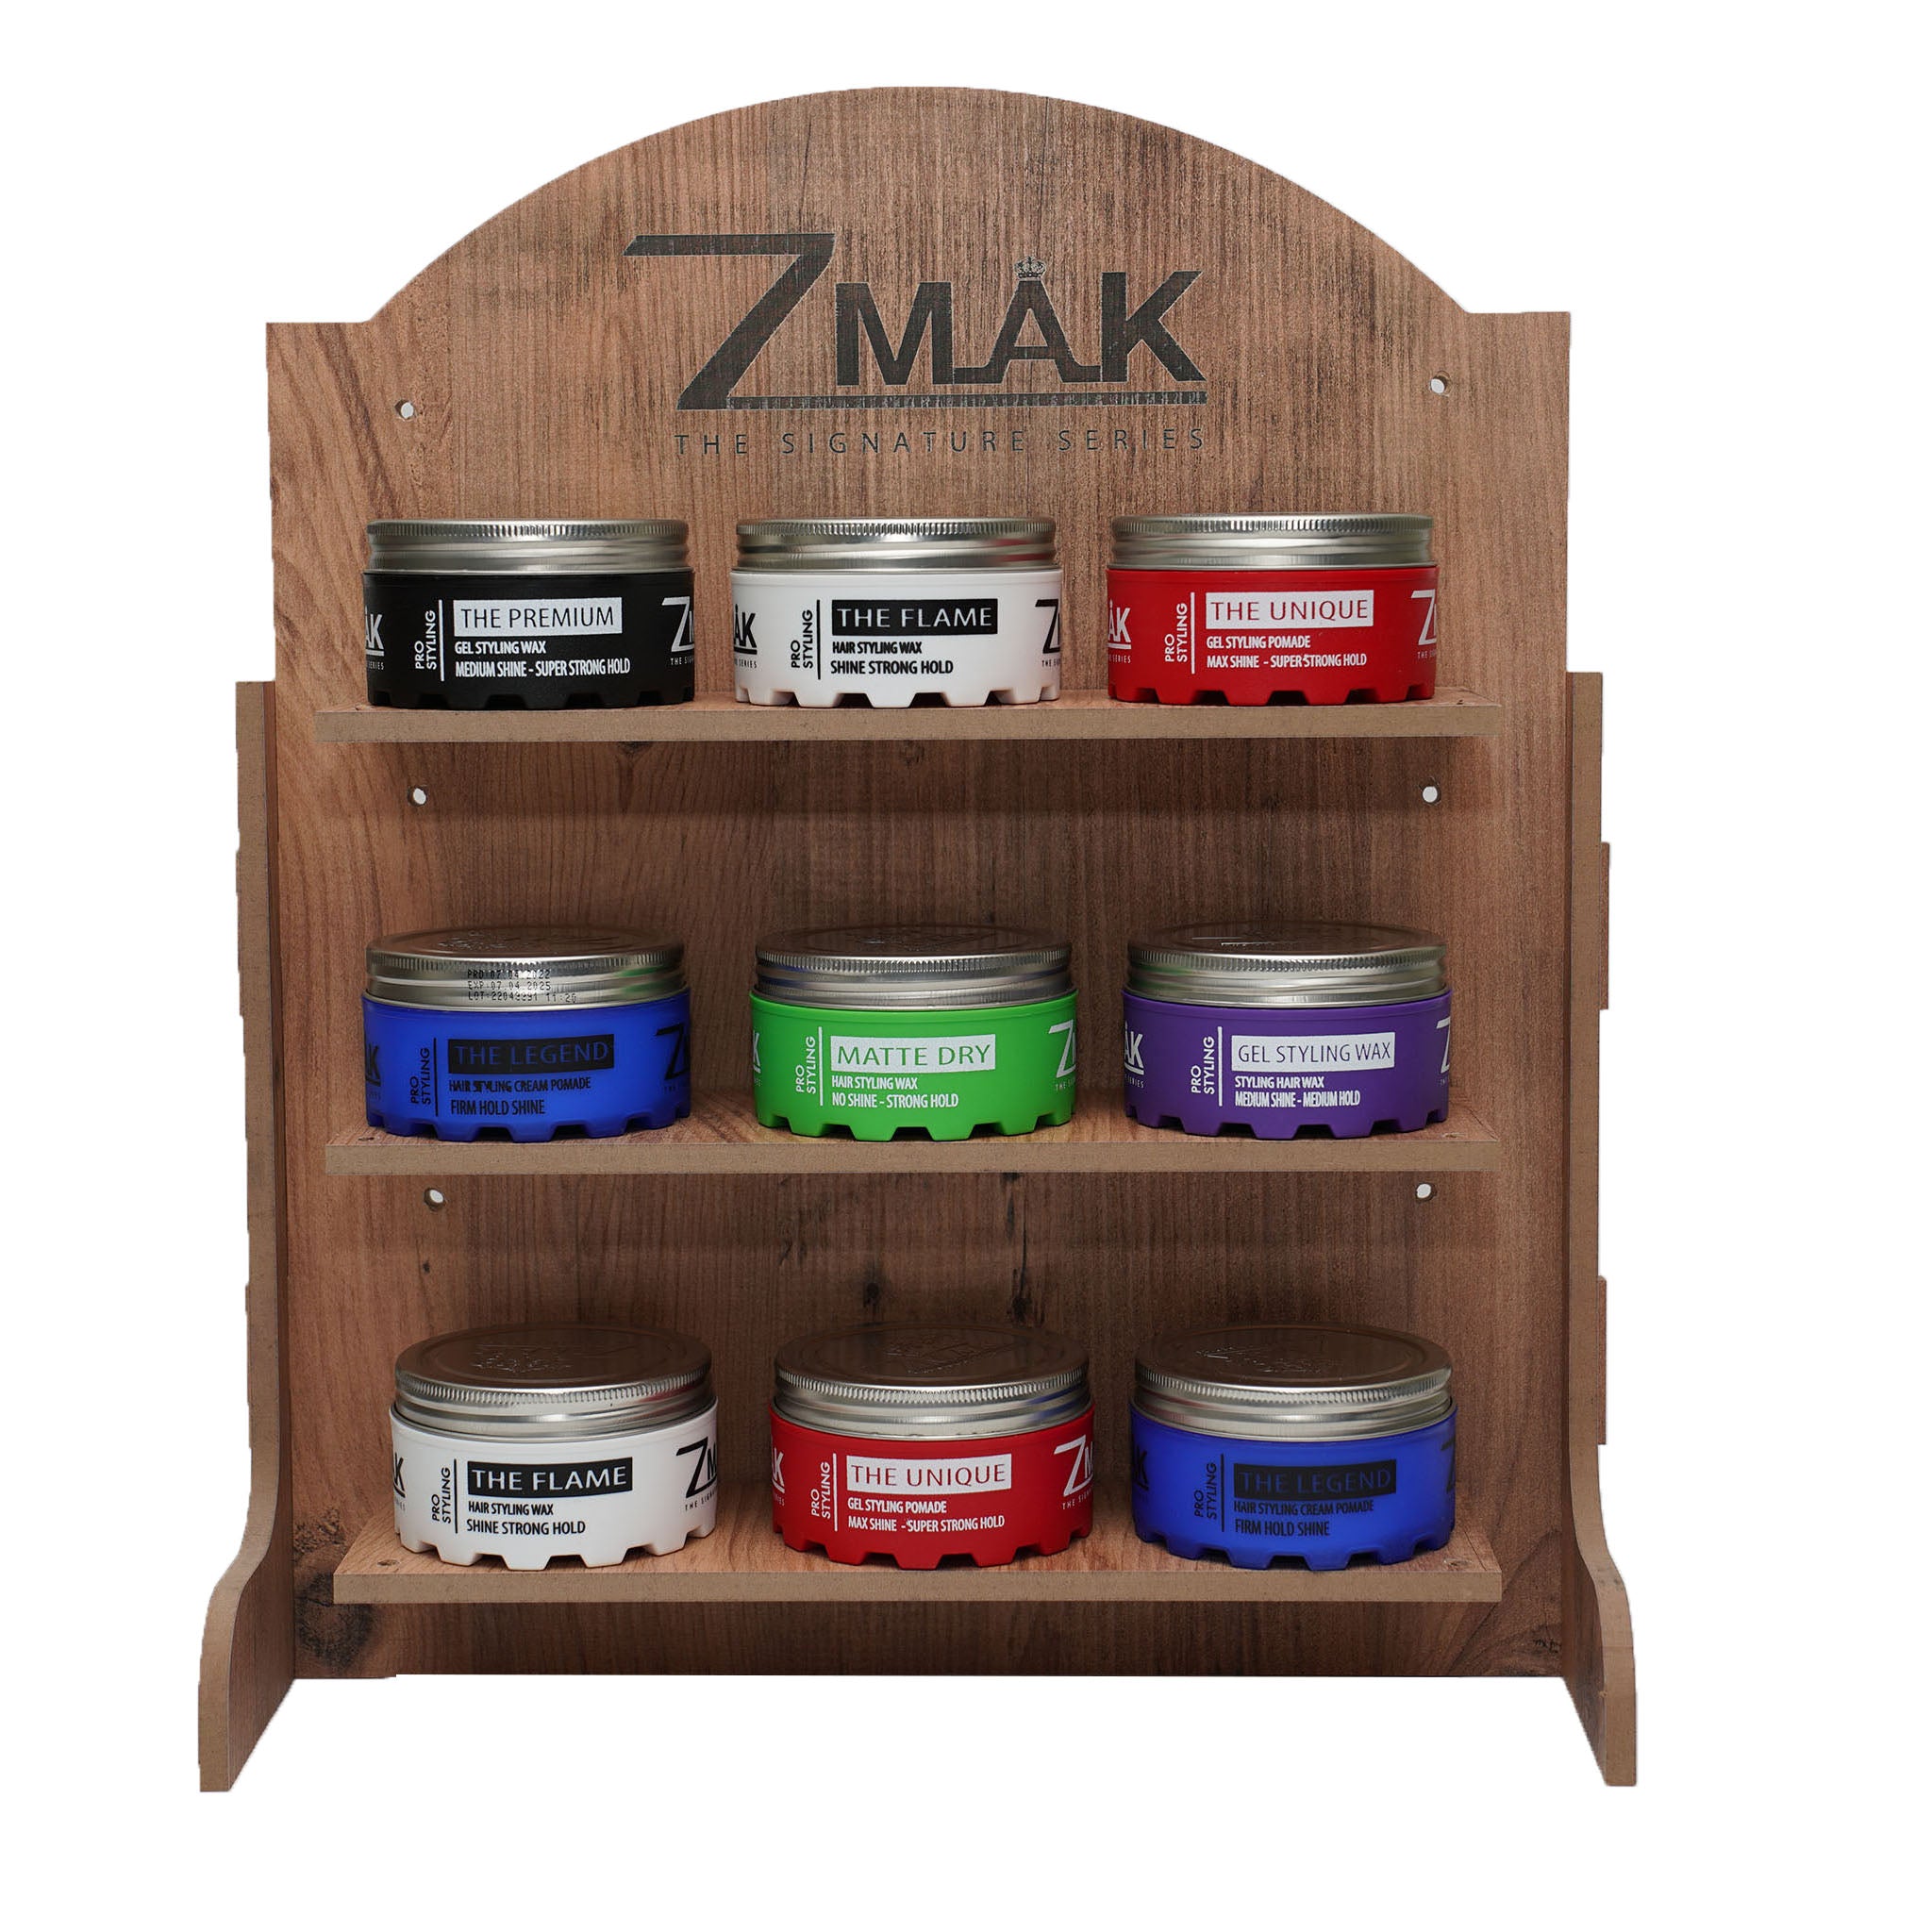 Display Shelf for Hair Wax - Small - Storage Shelving Unit